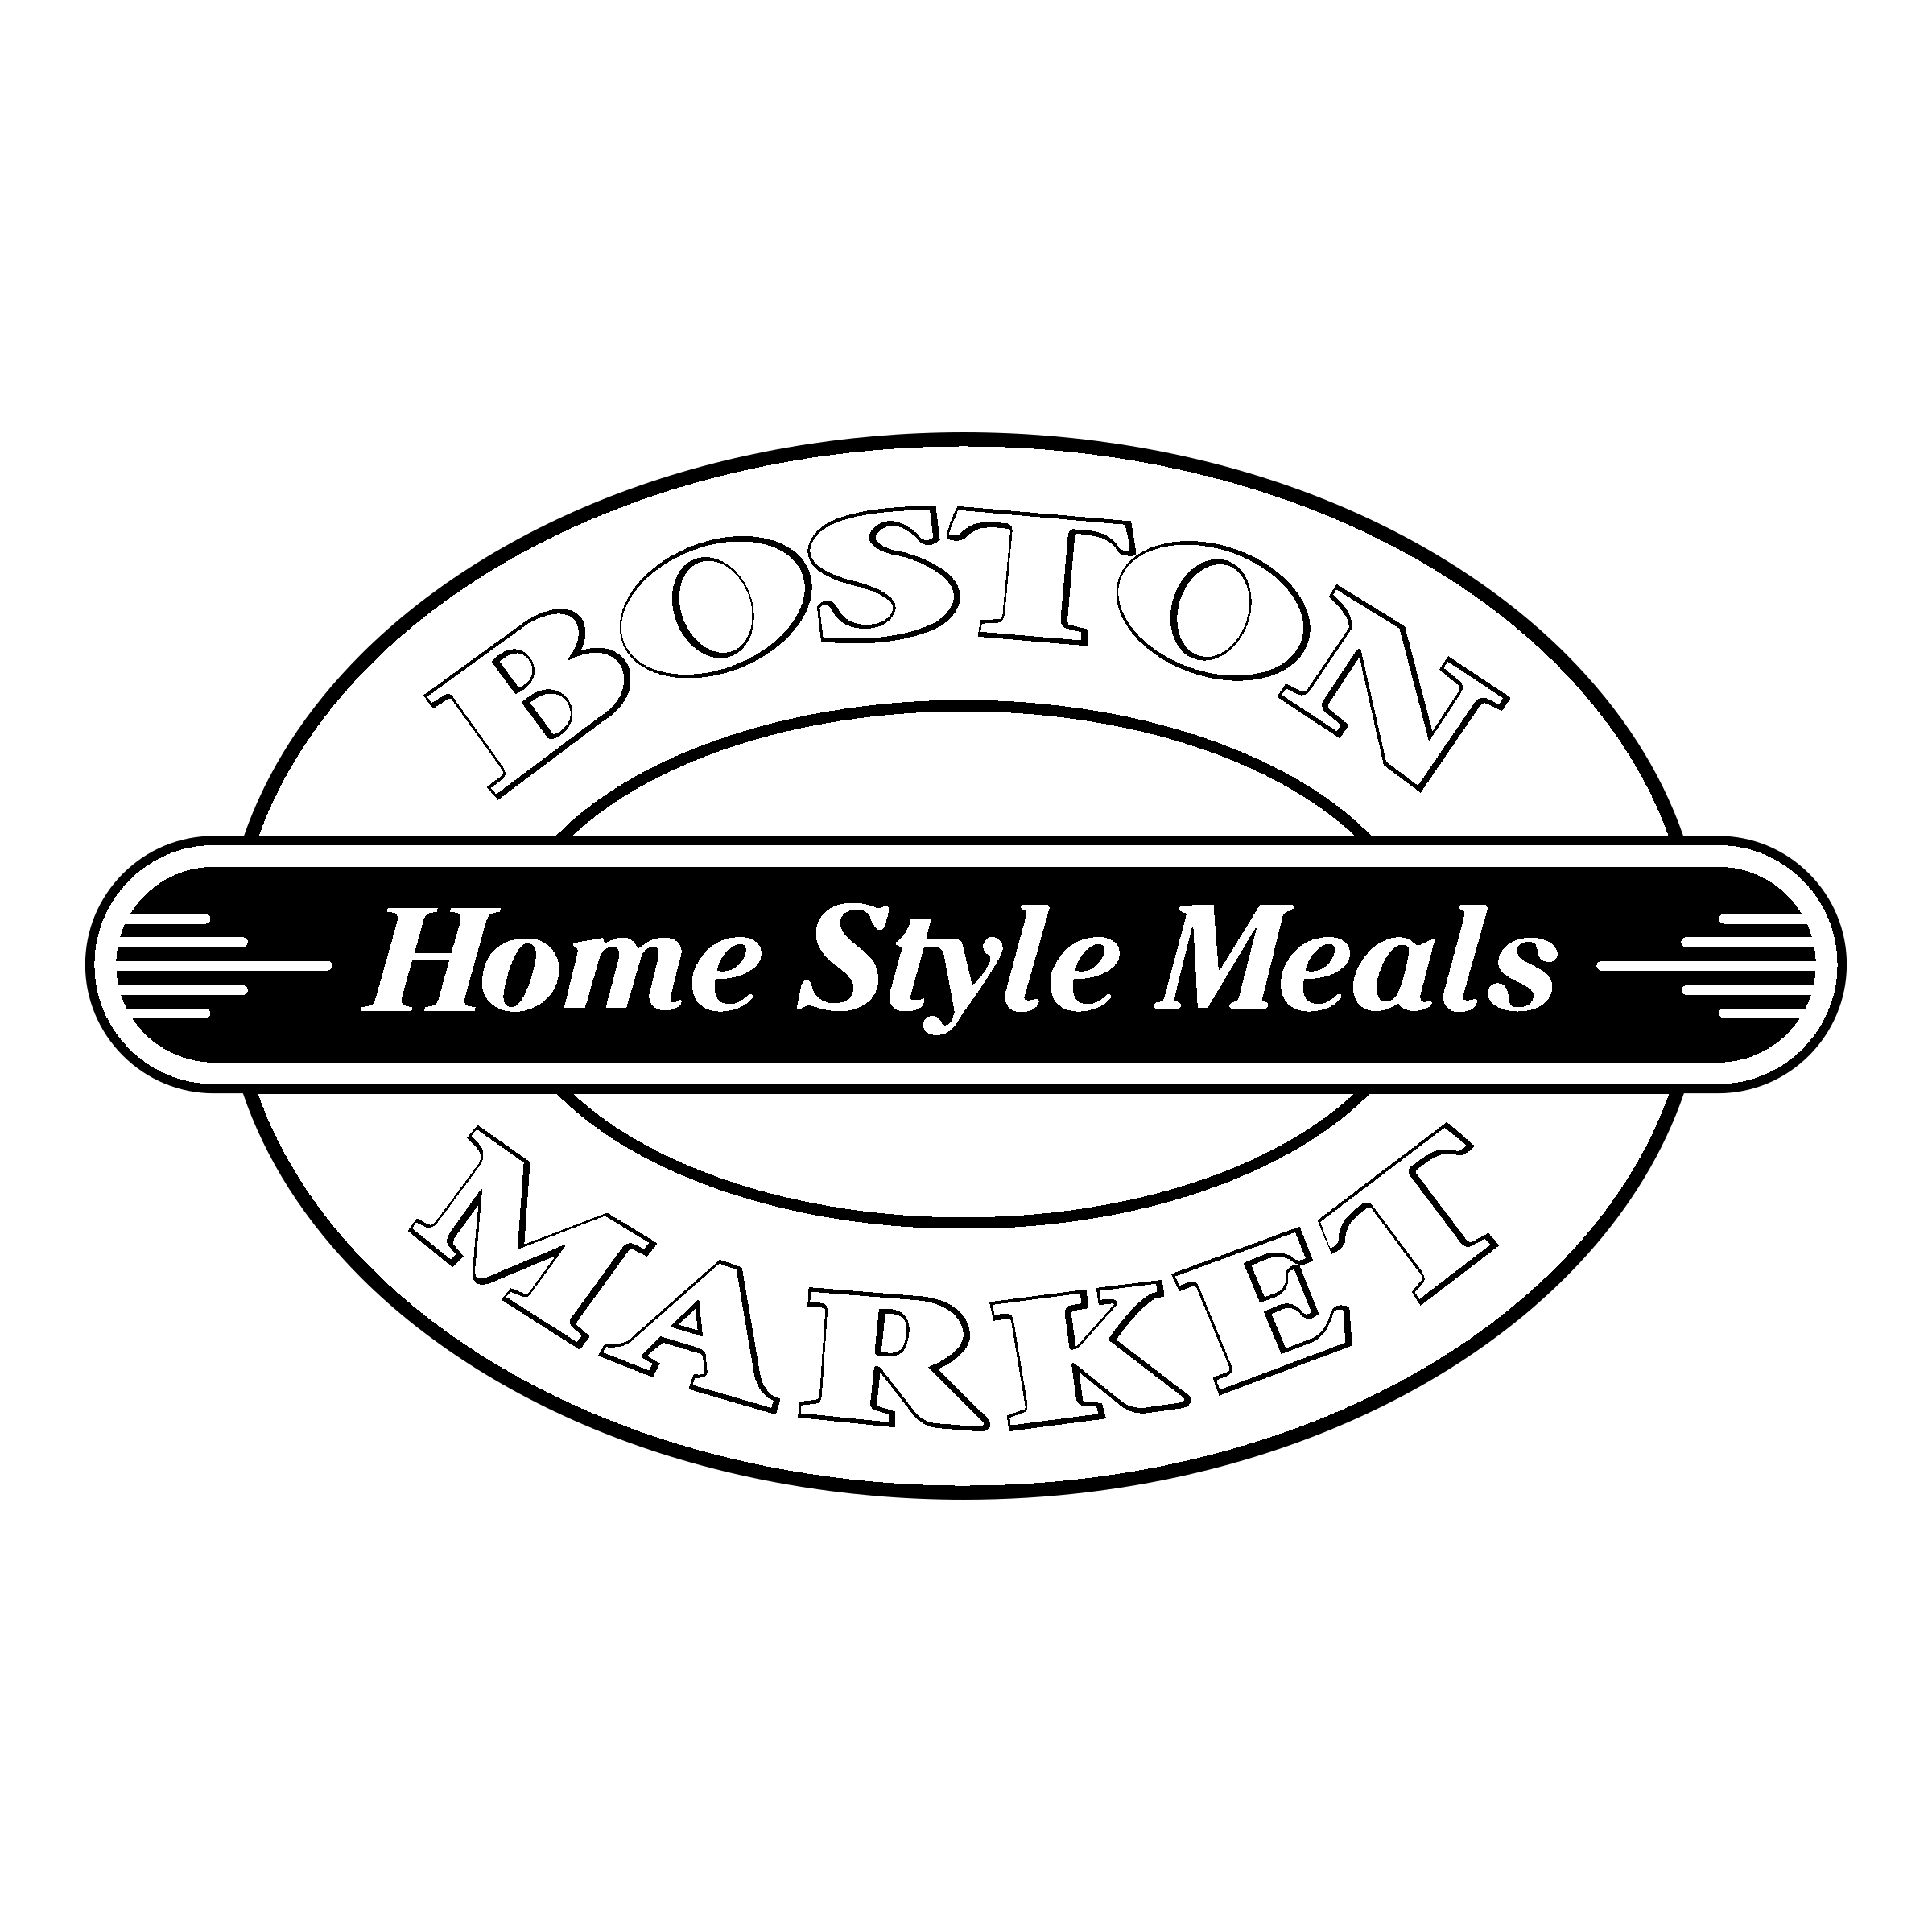 Boston Market Logo PNG Transparent & SVG Vector.